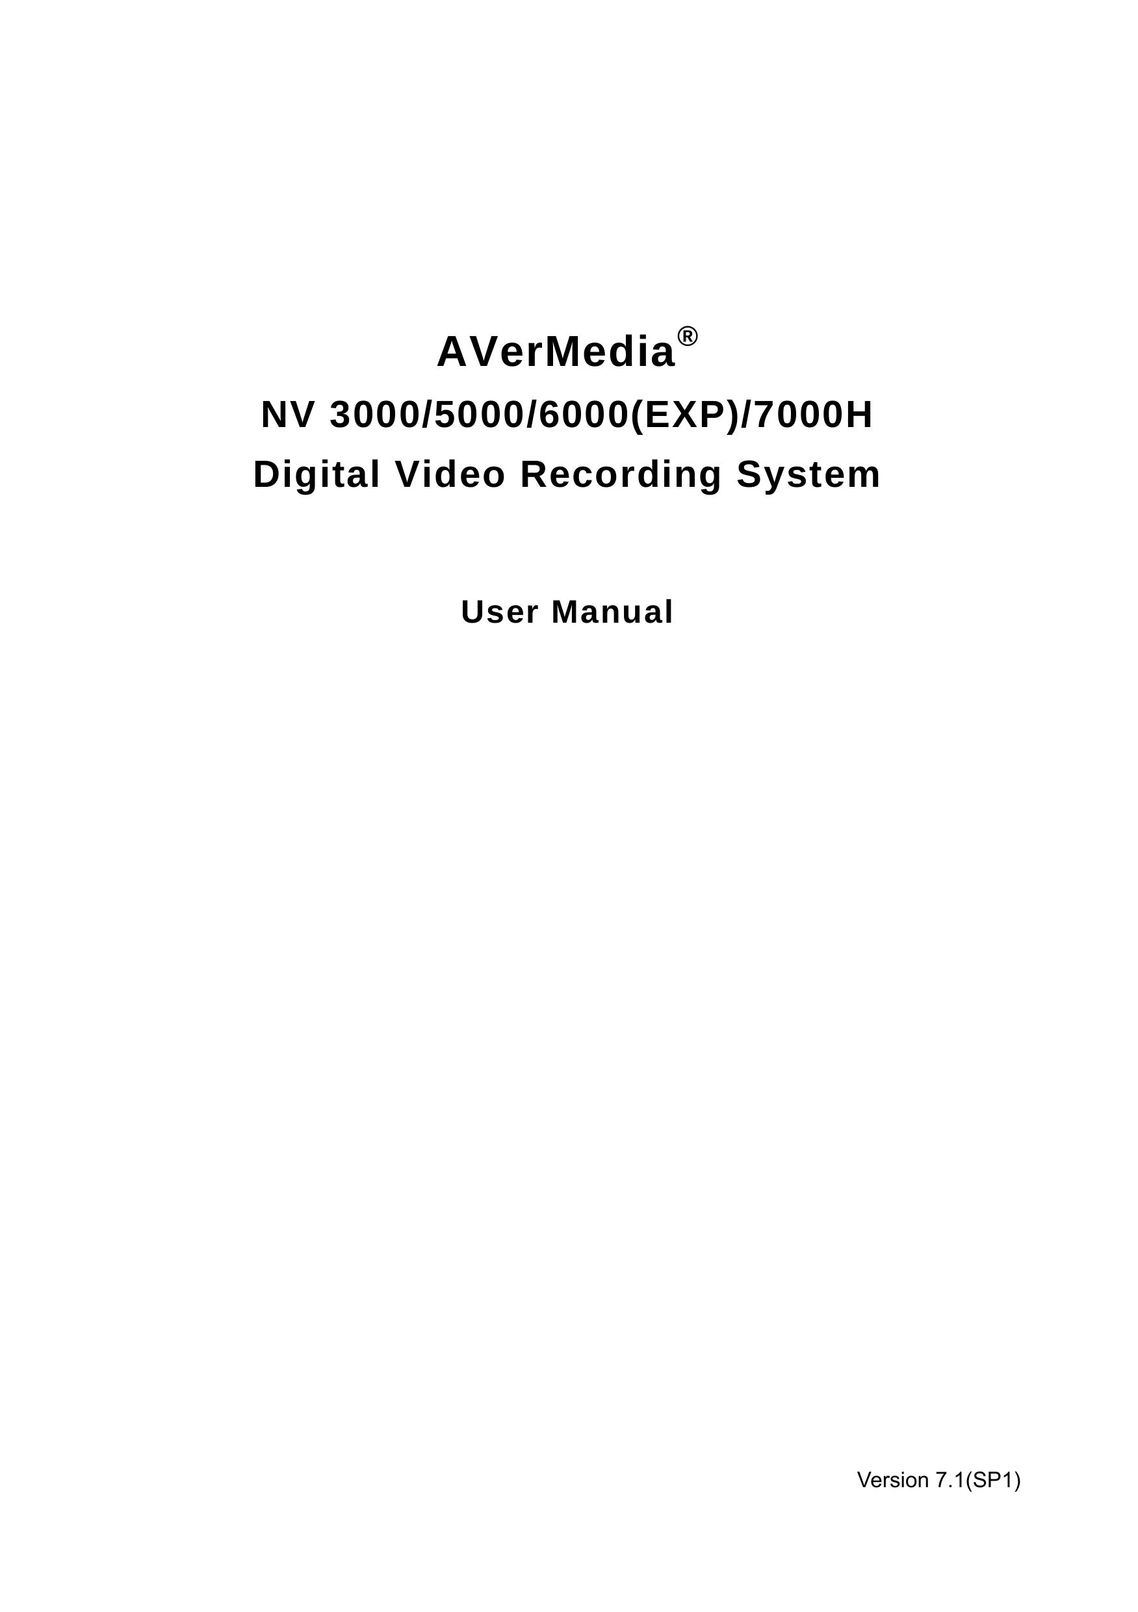 AVerMedia Technologies NV 6000 EXP DVR User Manual